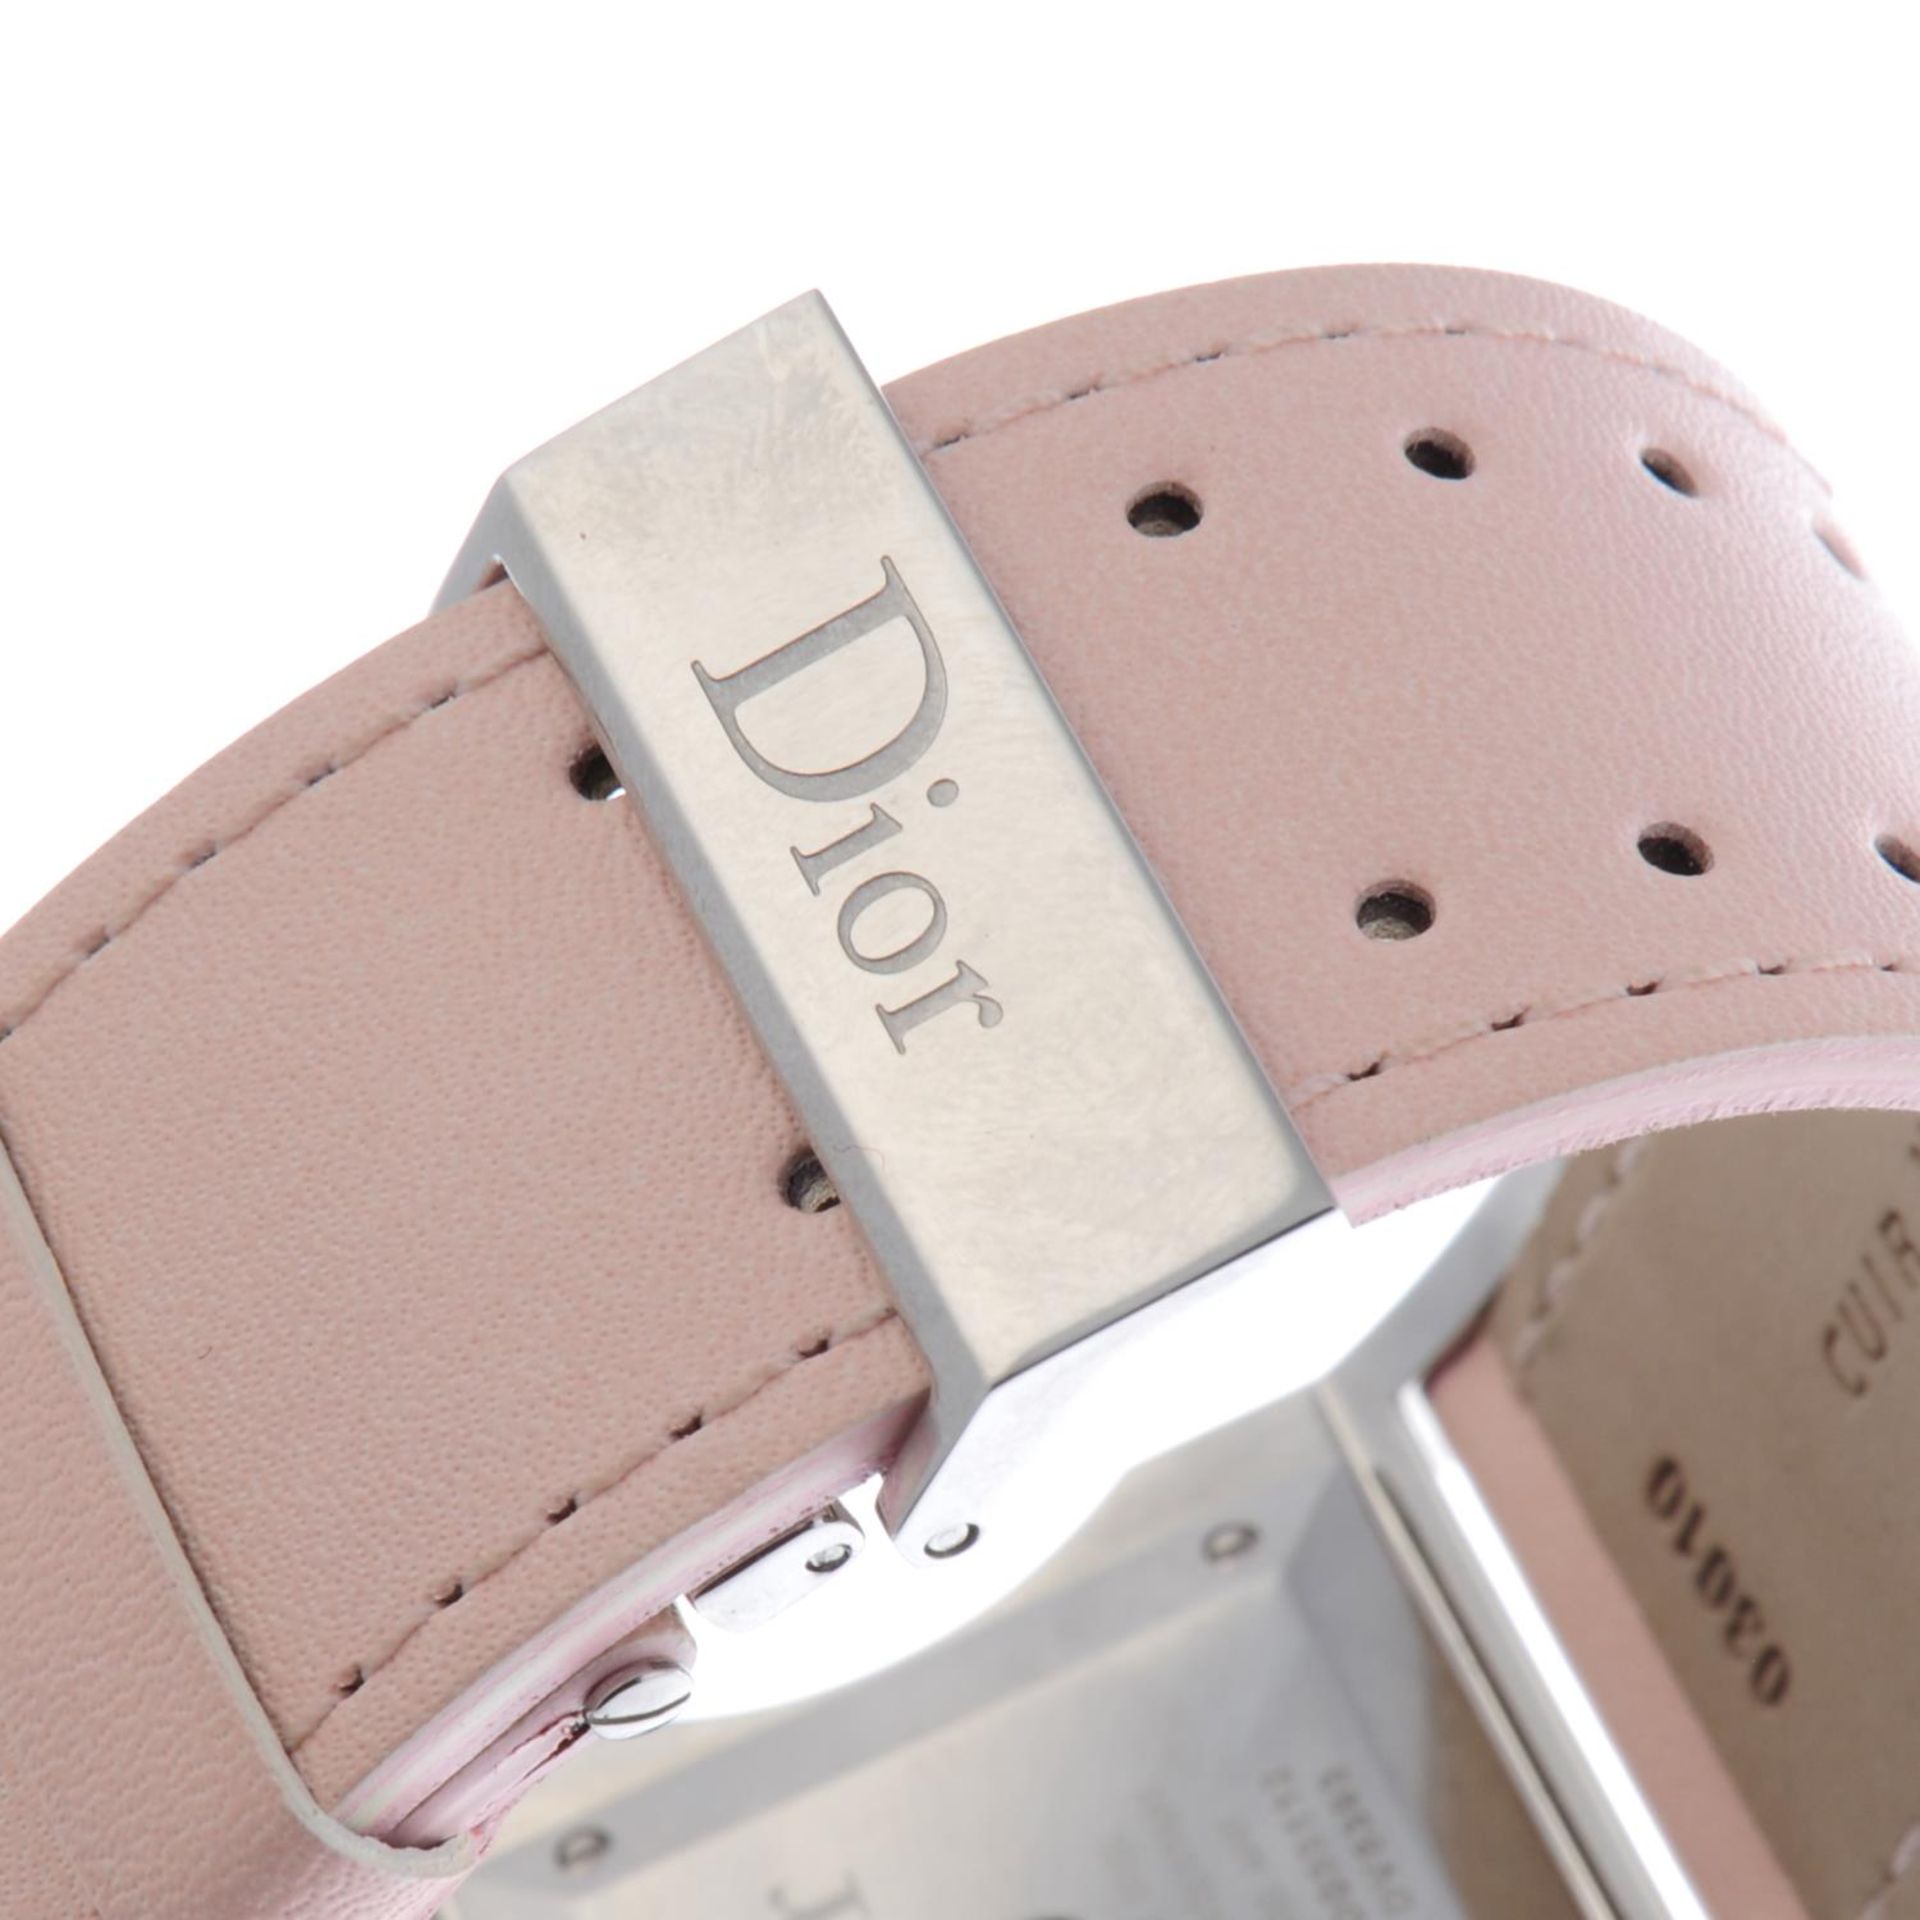 DIOR - a lady's Chris 47 wrist watch. - Image 2 of 3